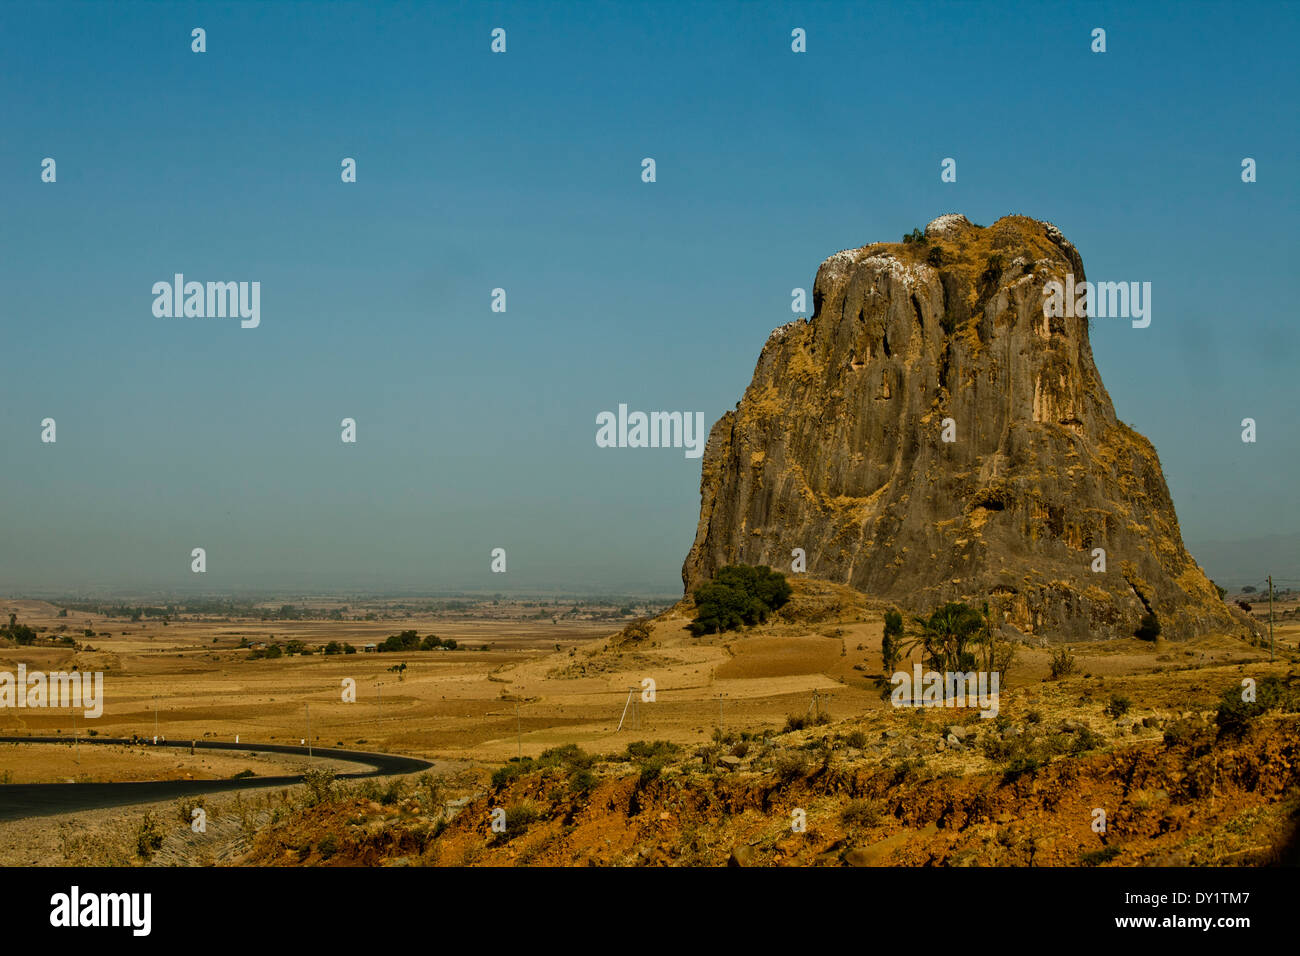 Large Rock Monolith with Road Ethiopia Africa vista Stock Photo